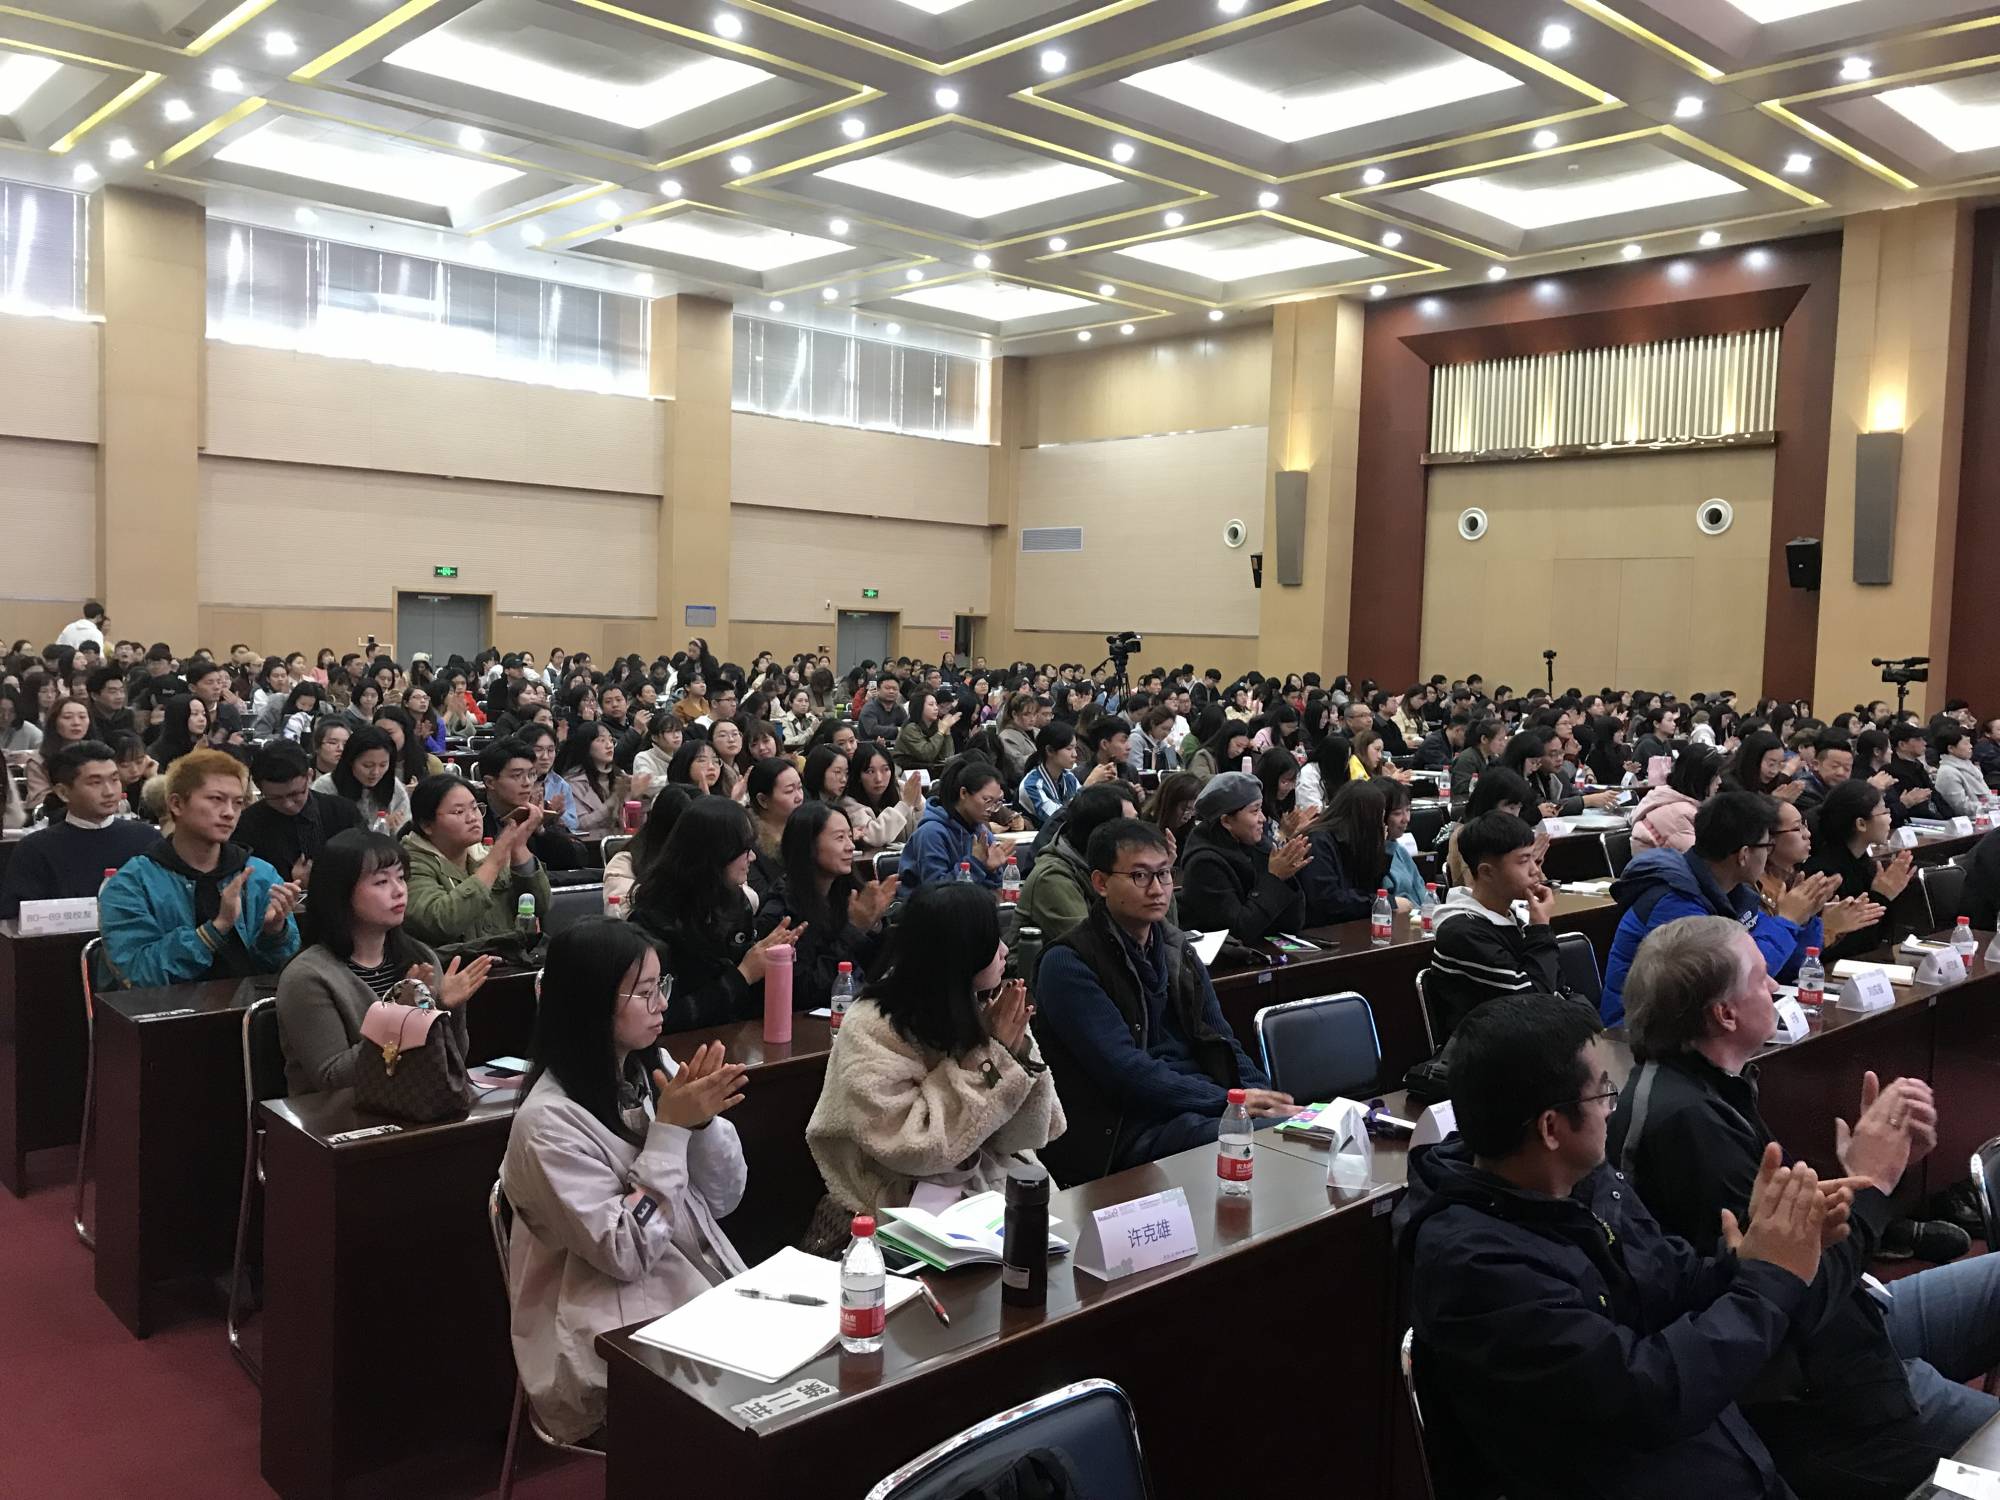 Workshop
Hubei University of Technology